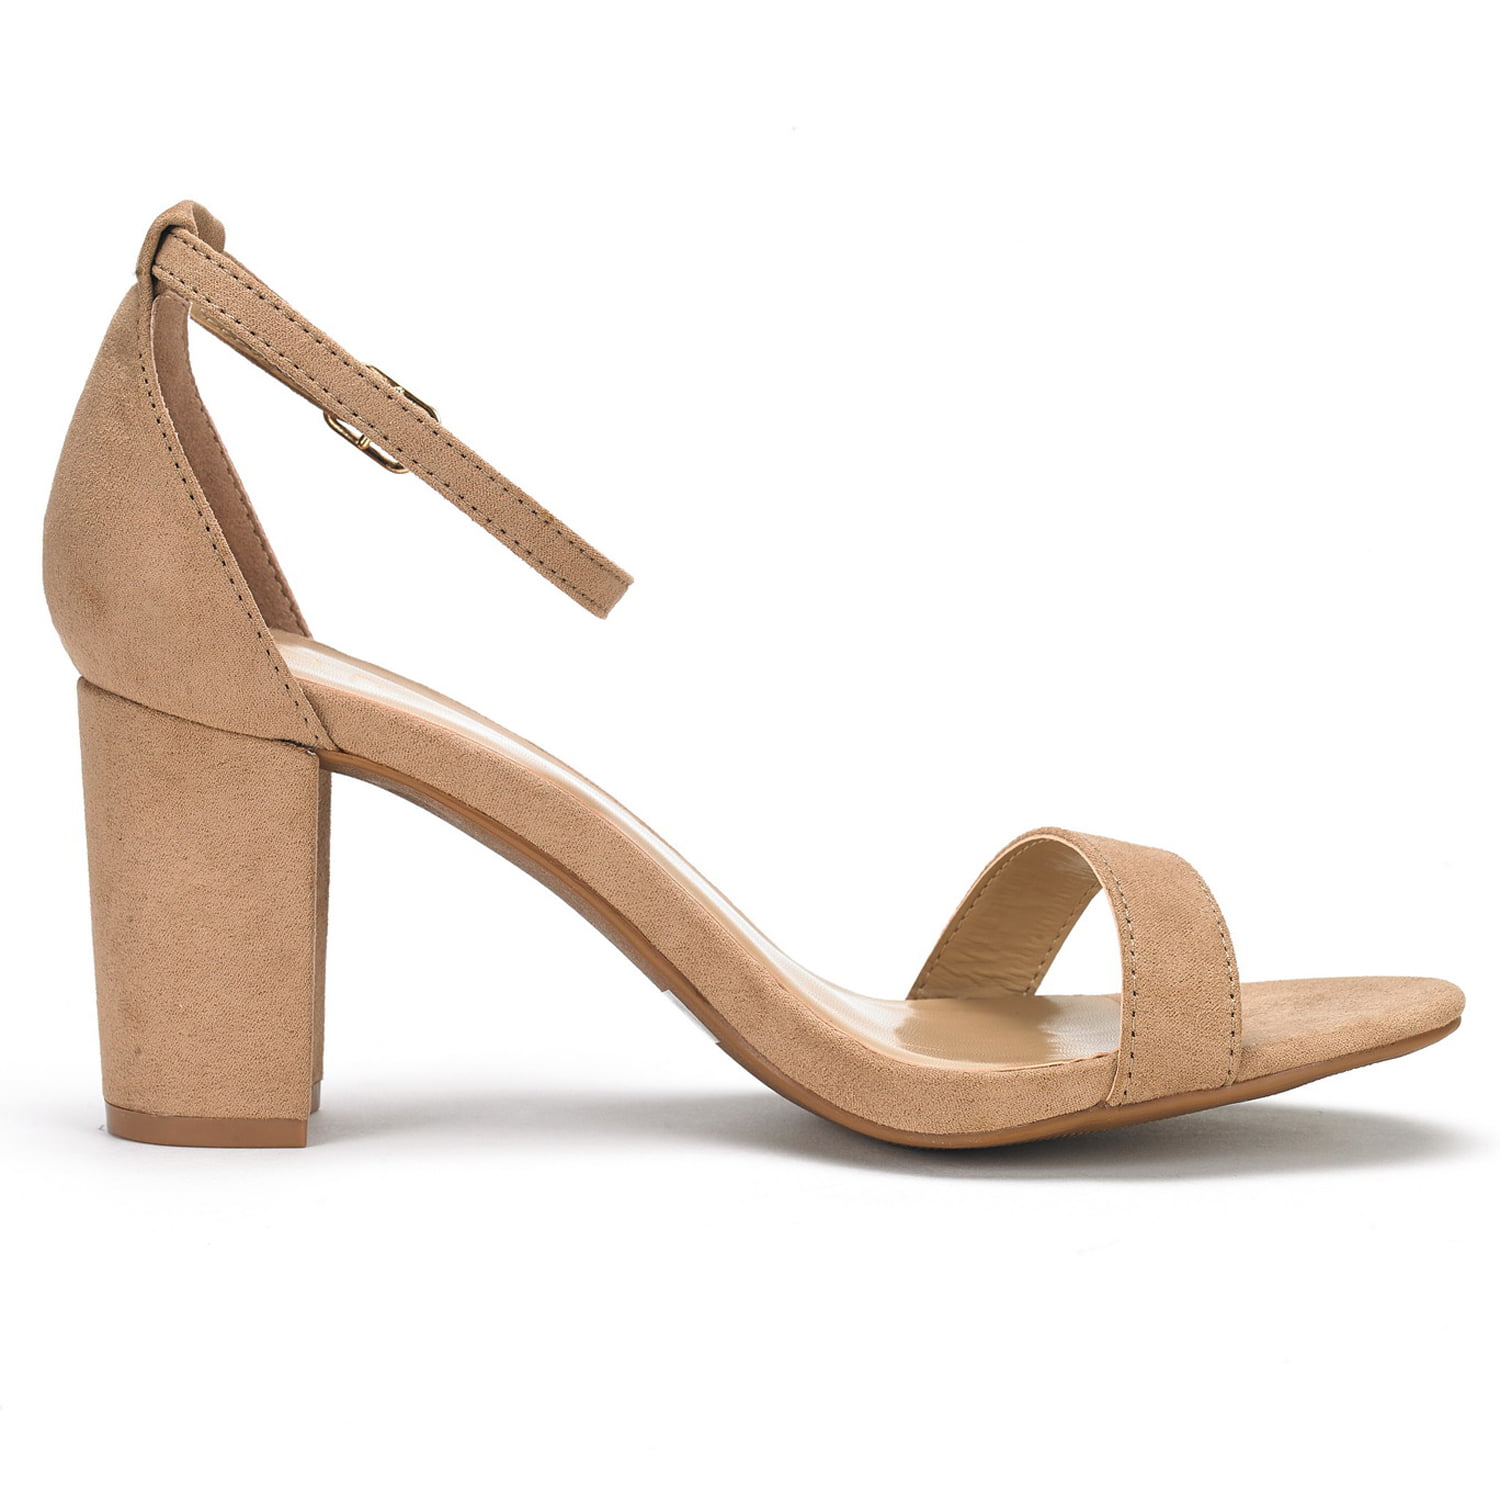 2.5inch heels - Footprints Shoe Boutique